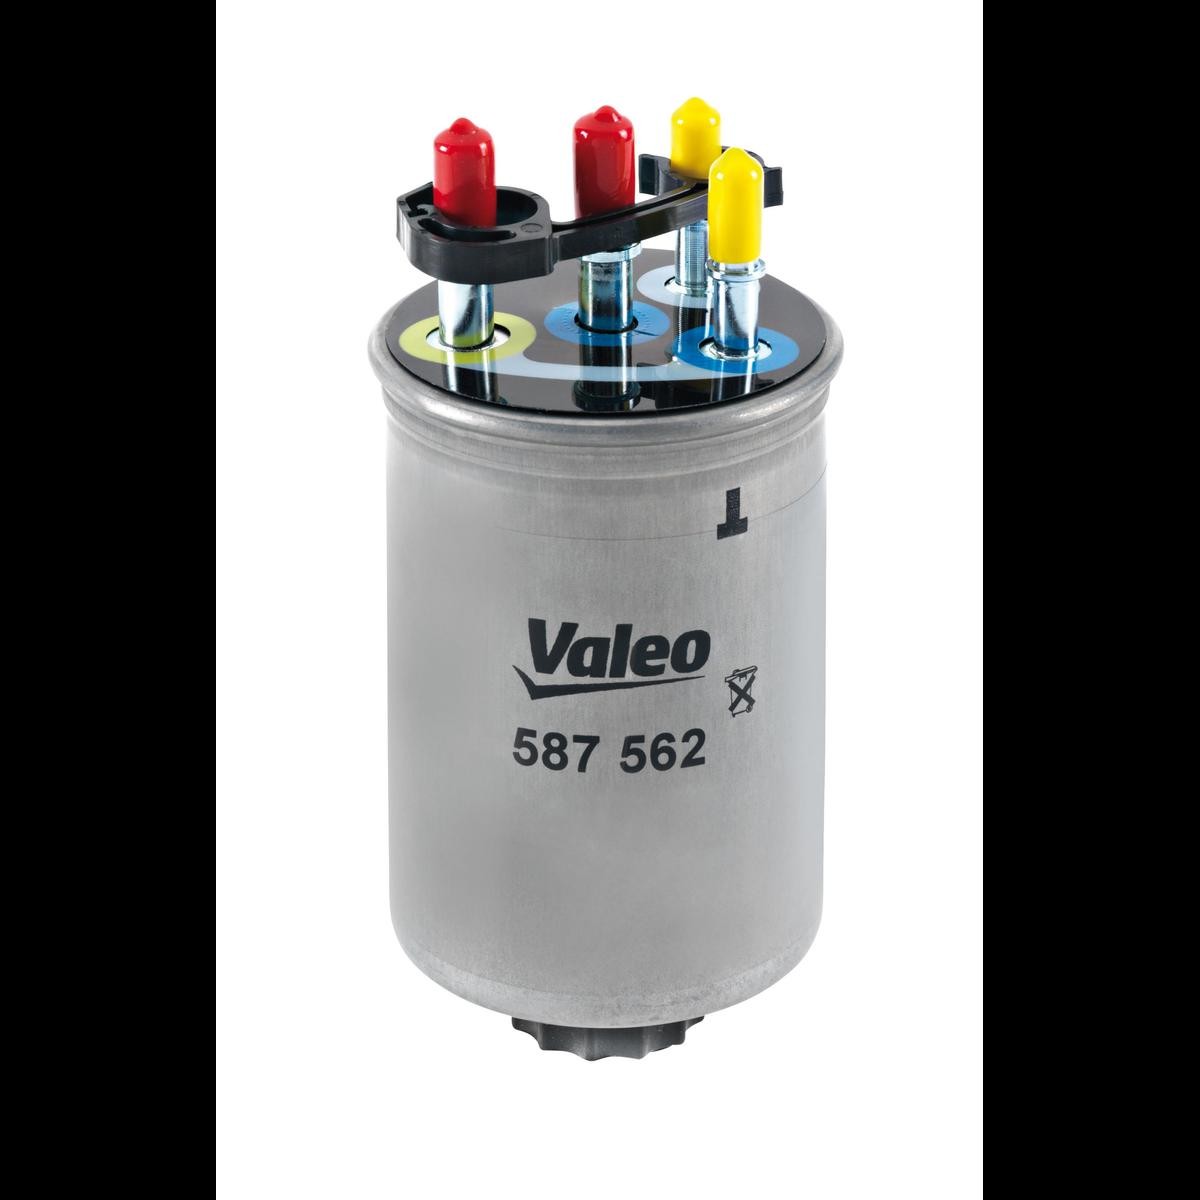 VALEO 587562 Fuel filter JAGUAR experience and price